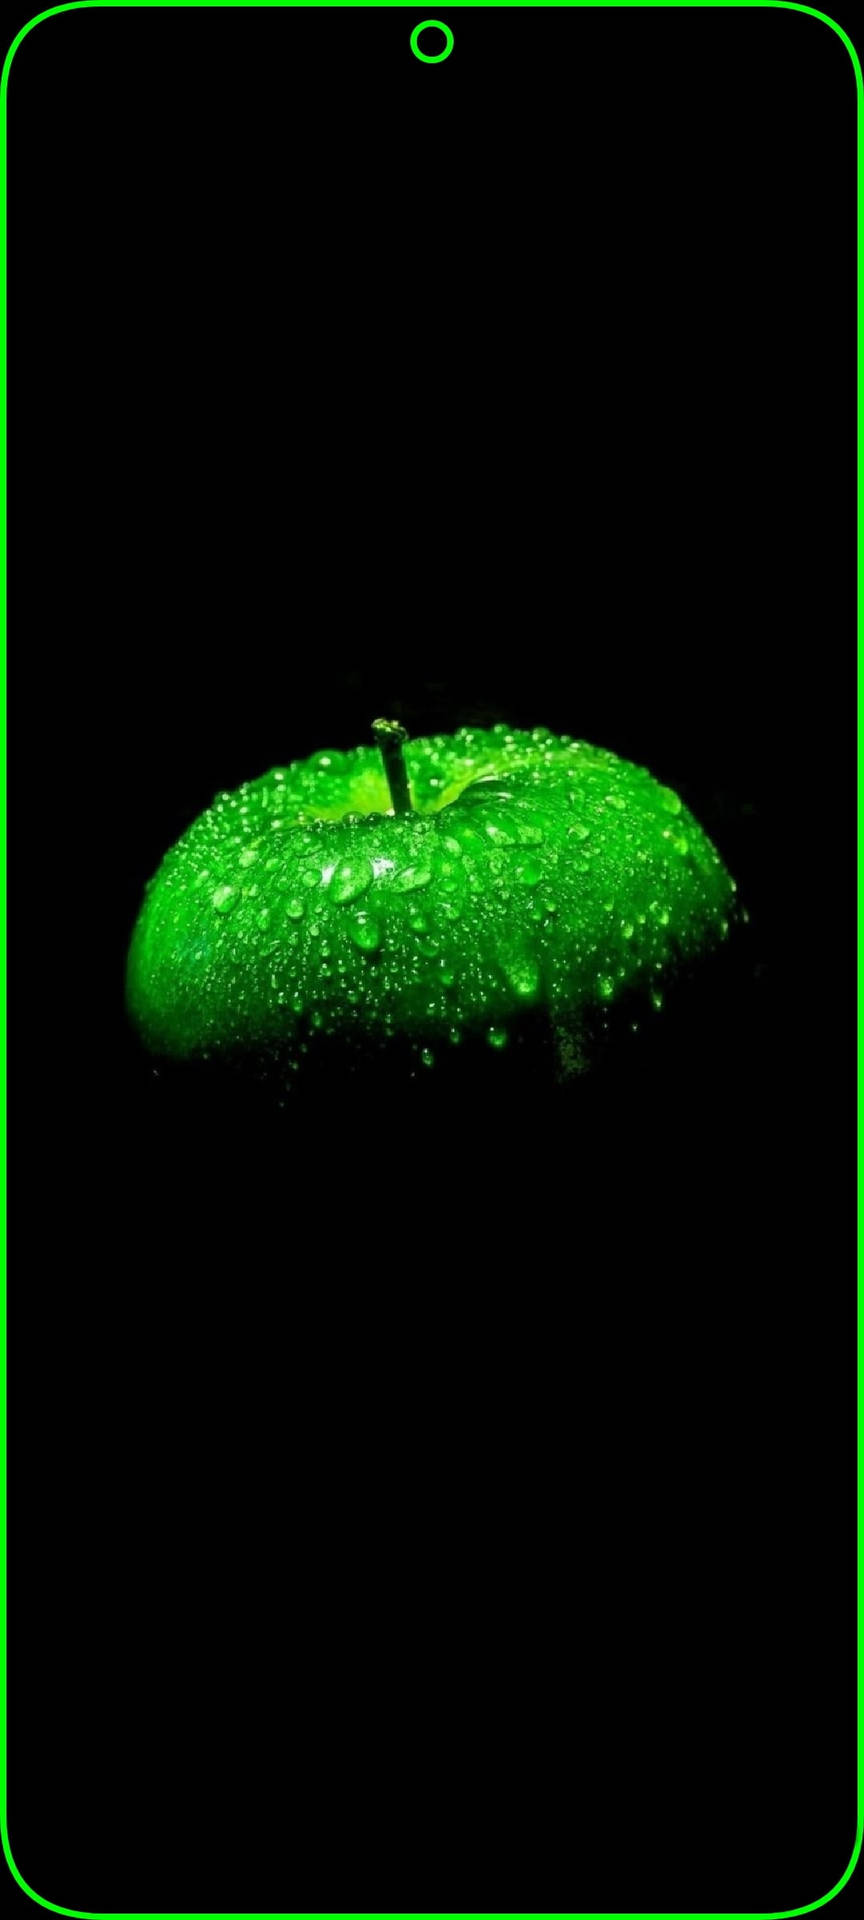 Green Apple Punch Hole 4k